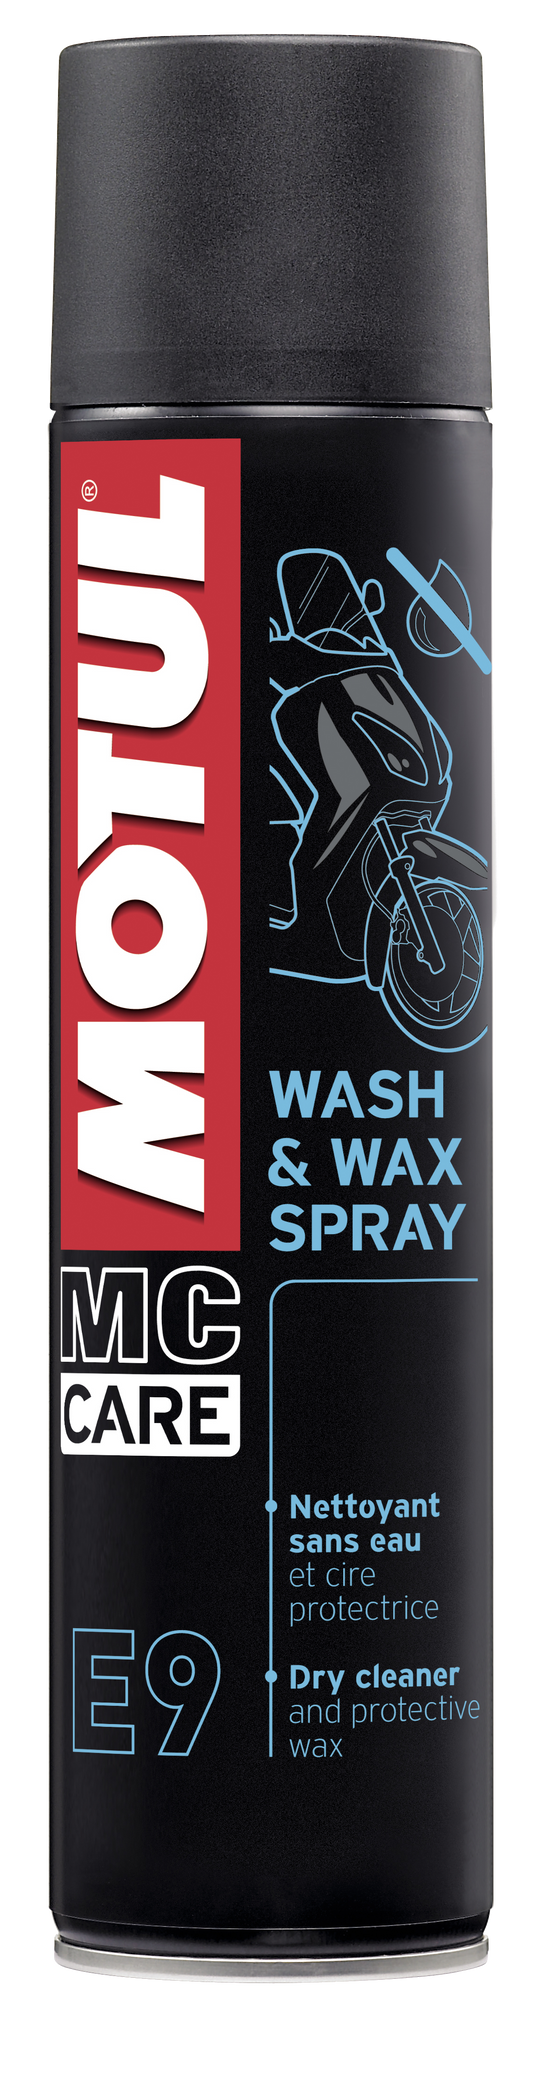 Motul Wash & Wax E9 Spray, 400ml